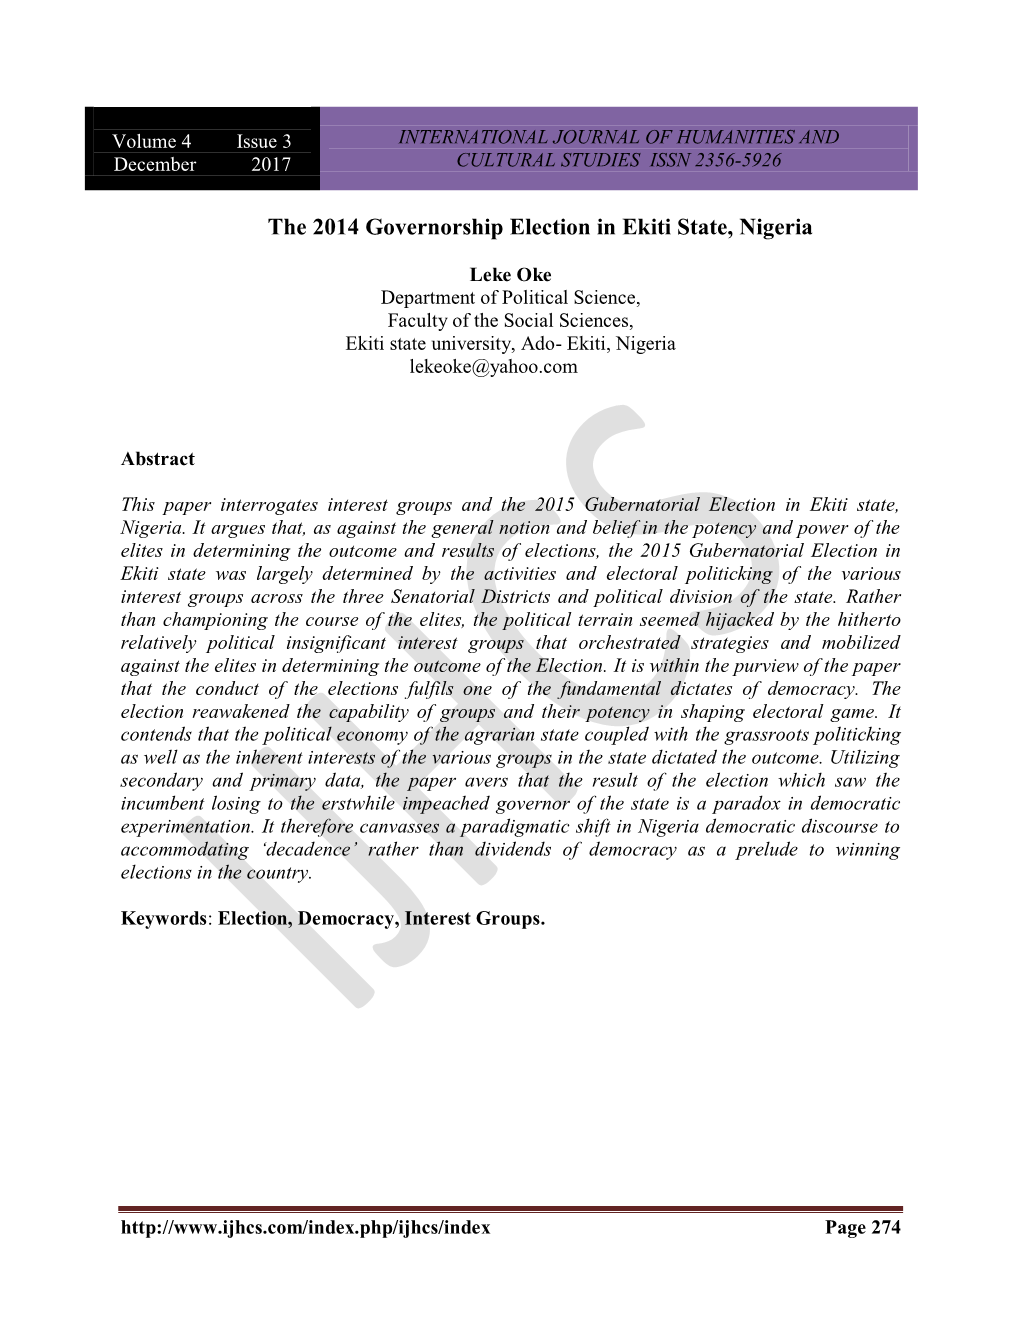 The 2014 Governorship Election in Ekiti State, Nigeria